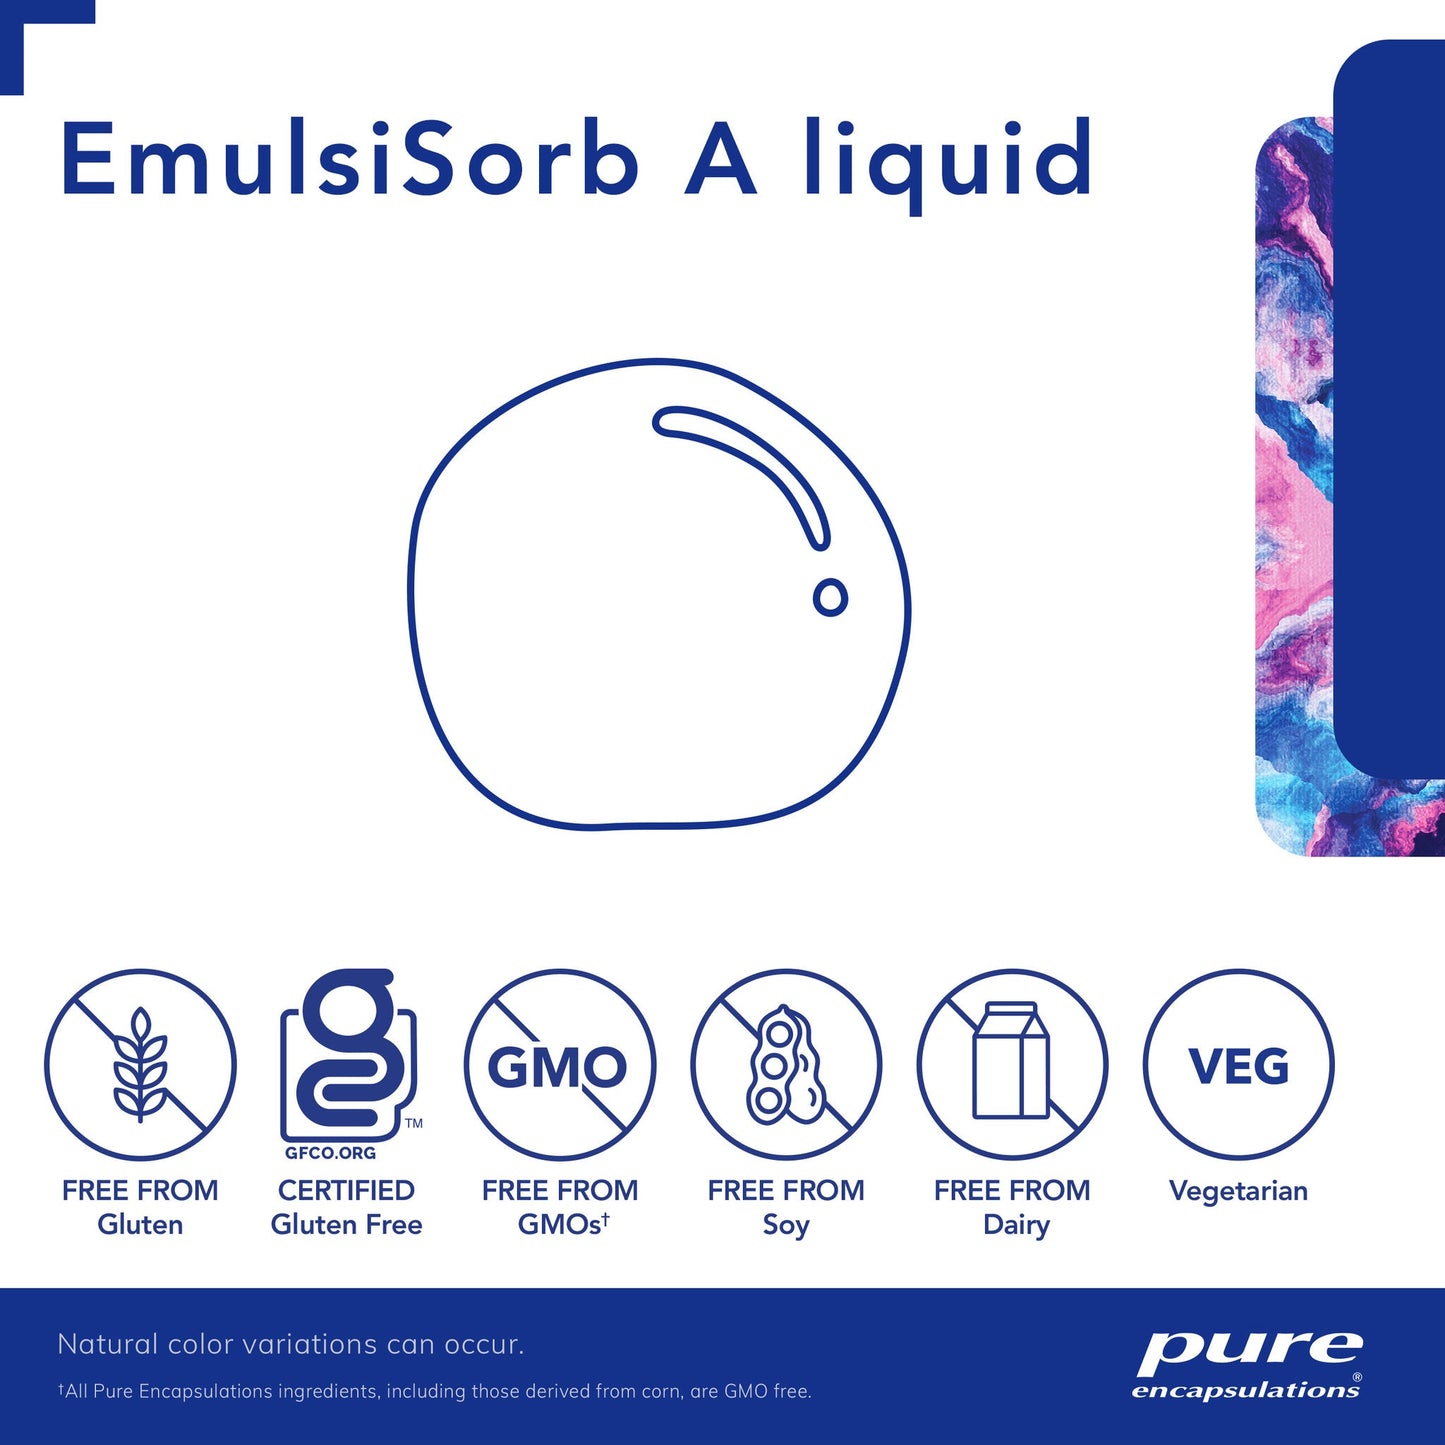 EmulsiSorb A Liquid